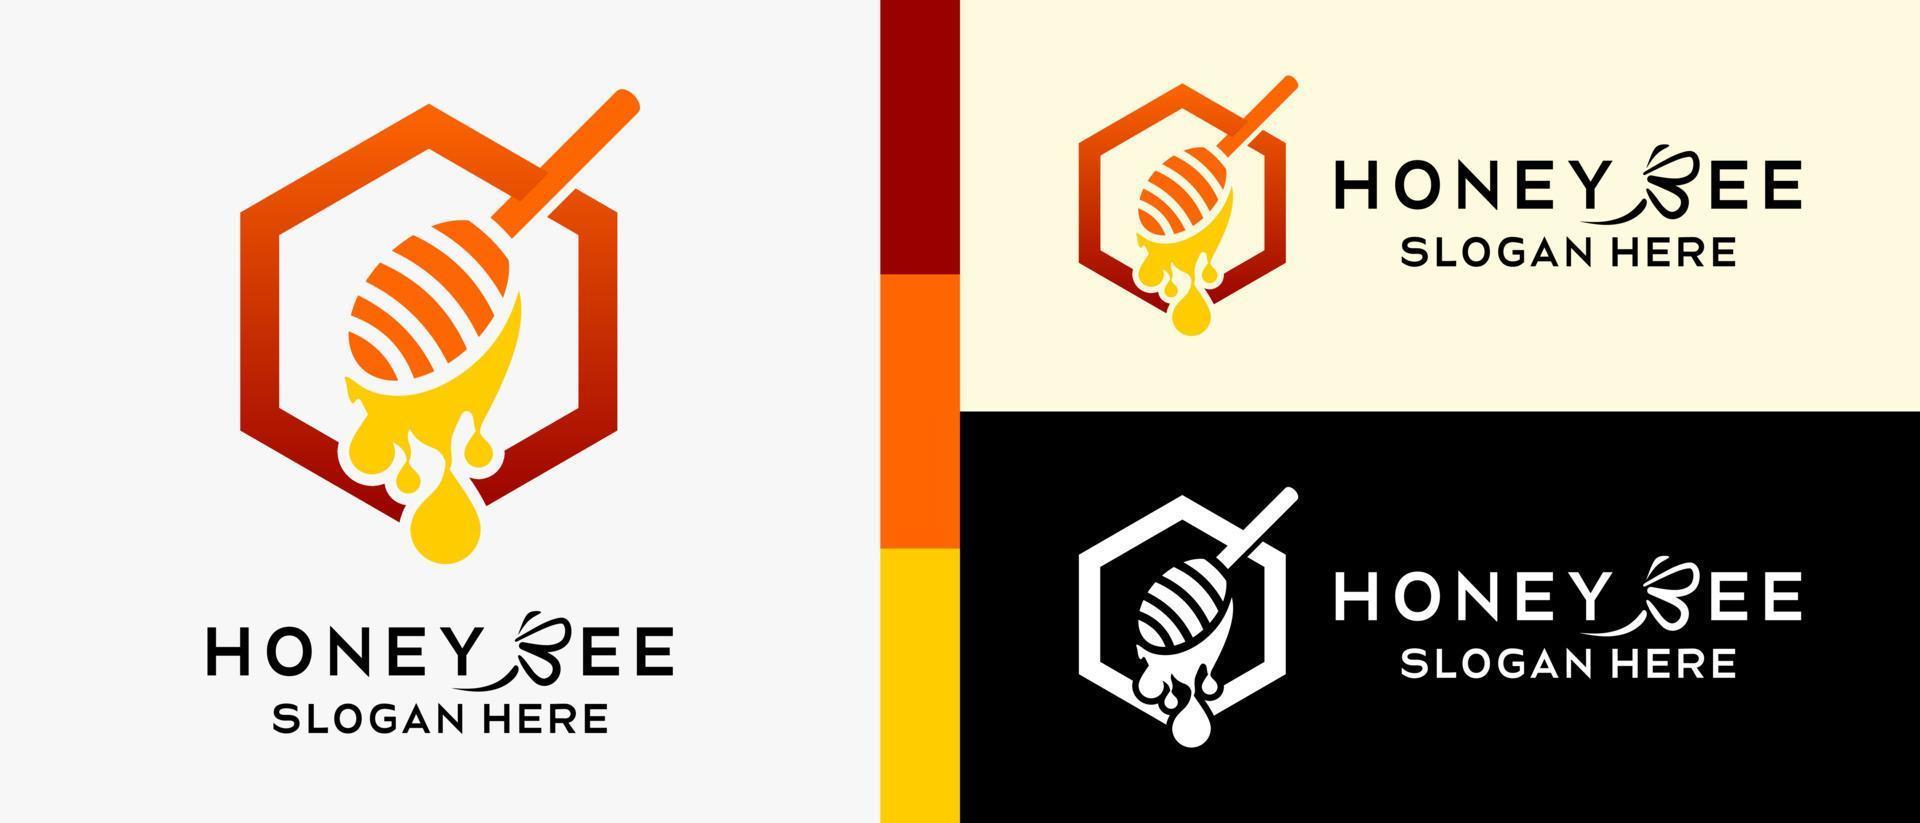 honey bee logo design template with creative elements concept, honey spoon or honey dipper in hexagon. premium vector logo illustration